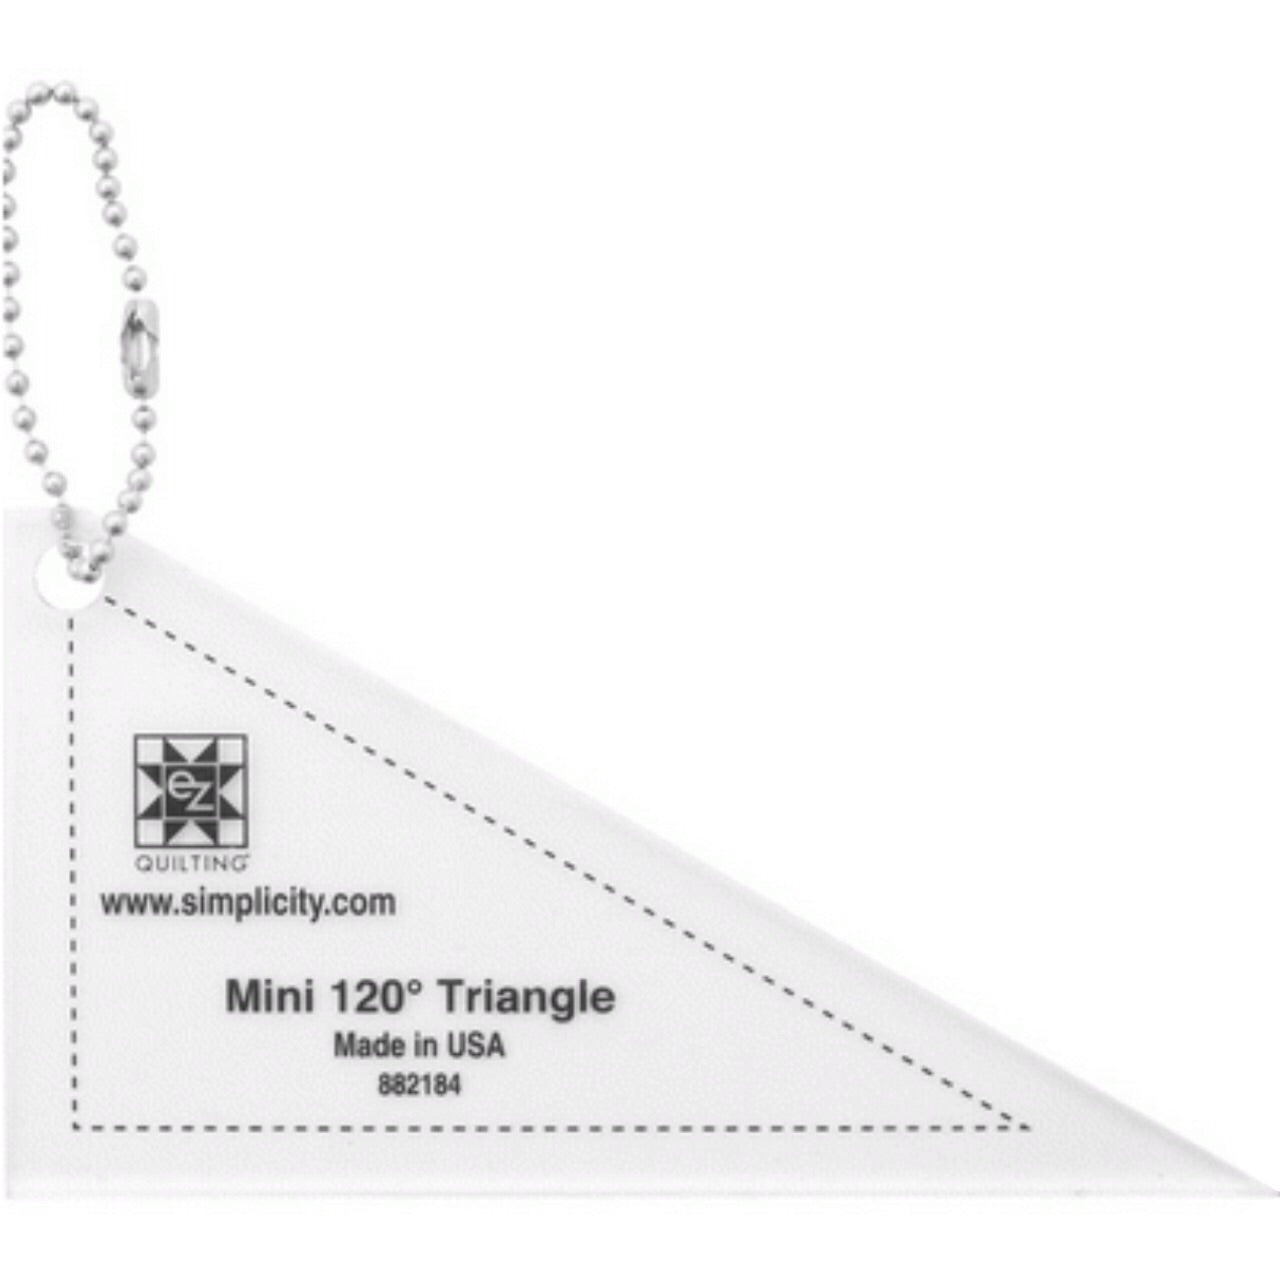 Mini Triangle 120 Acrylic Tool - Keychain